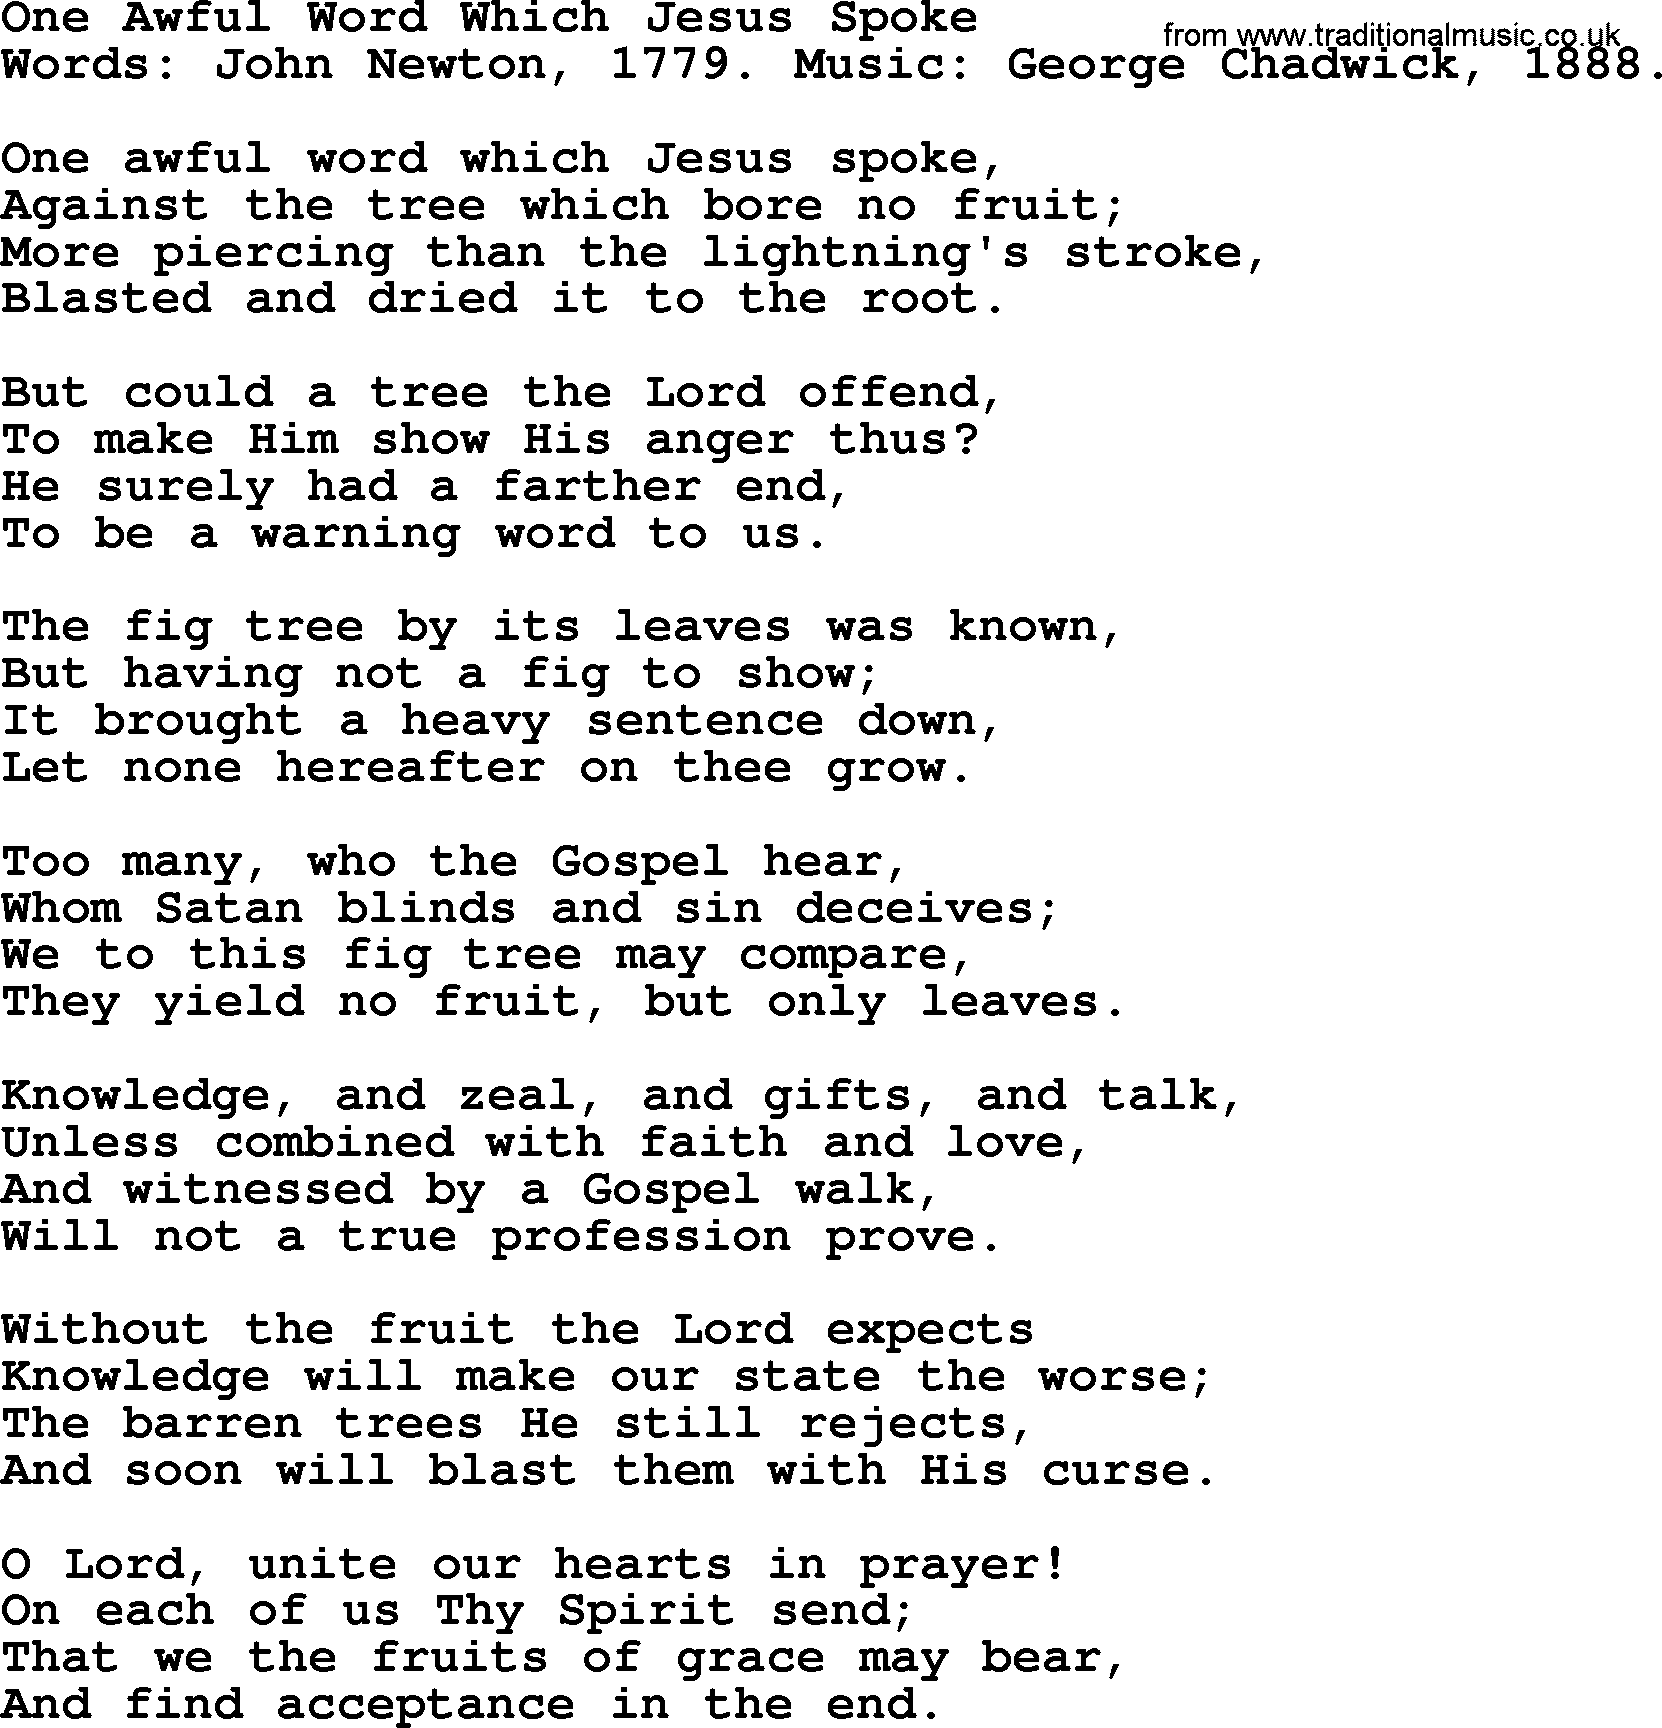 John Newton hymn: One Awful Word Which Jesus Spoke, lyrics